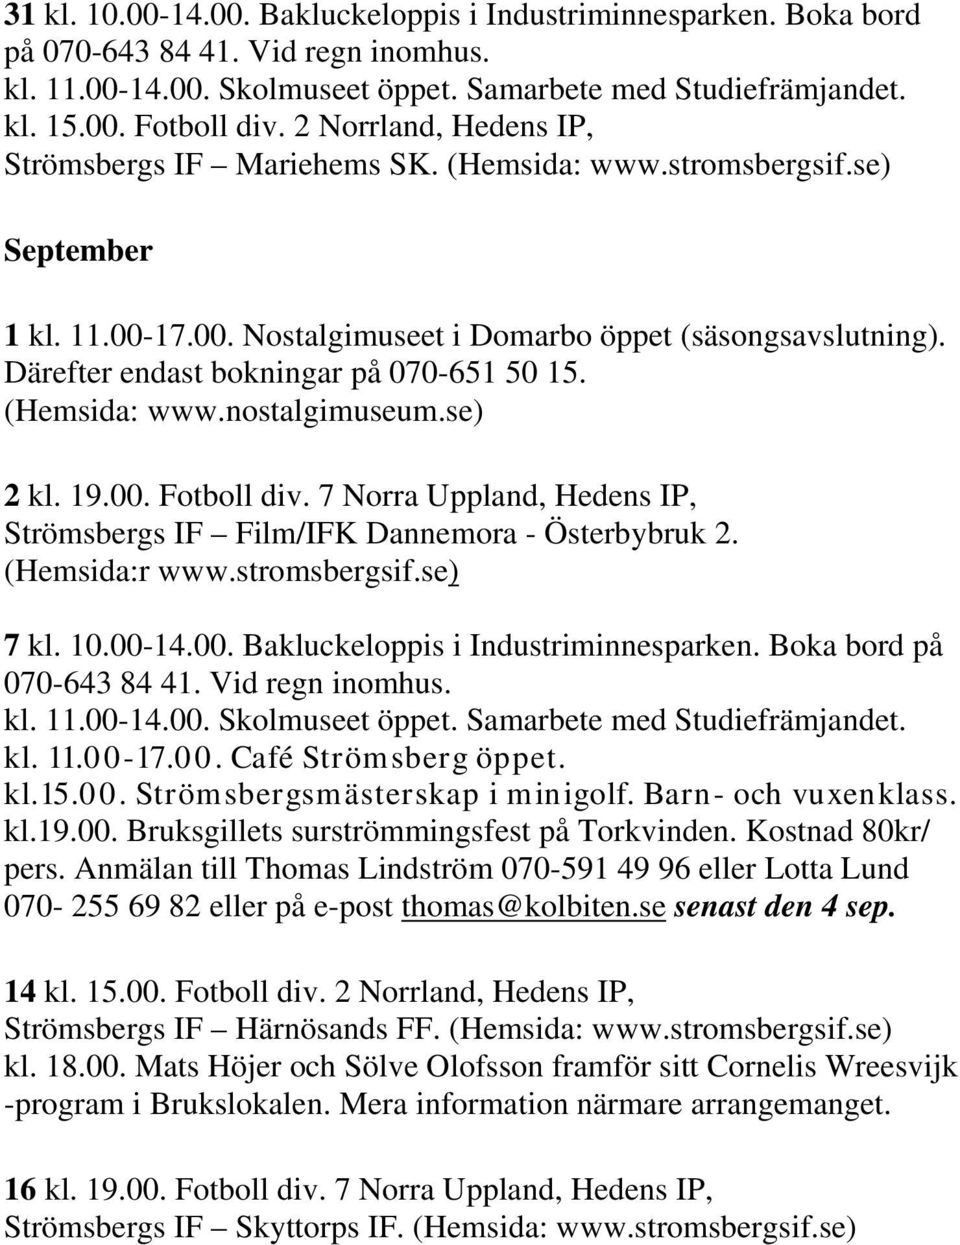 Därefter endast bokningar på 070-651 50 15. (Hemsida: www.nostalgimuseum.se) 2 kl. 19.00. Fotboll div. 7 Norra Uppland, Hedens IP, Strömsbergs IF Film/IFK Dannemora - Österbybruk 2. (Hemsida:r www.